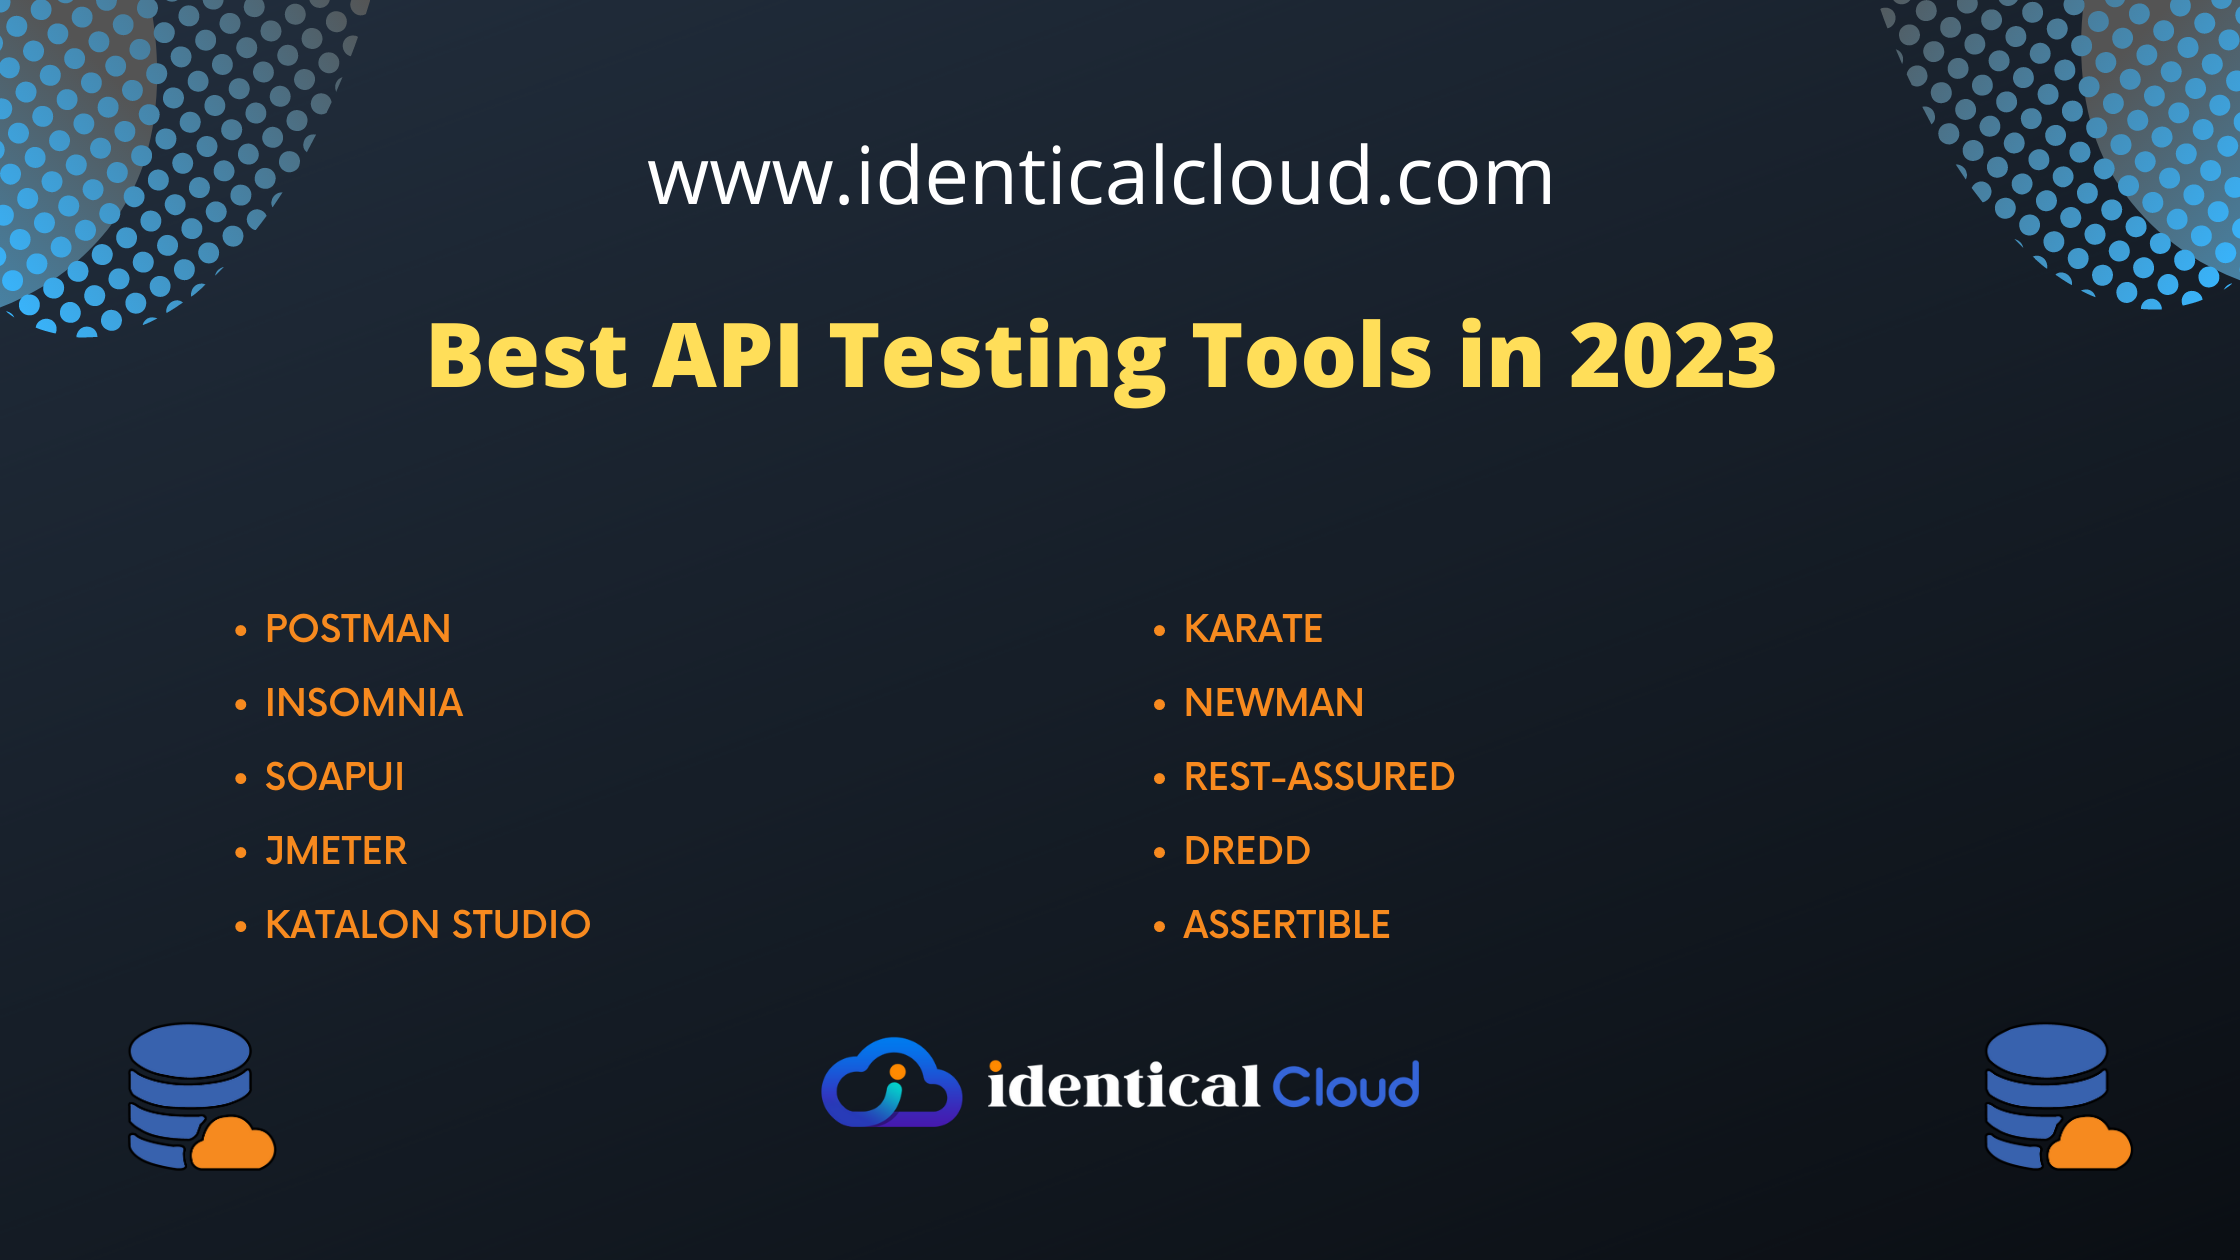 Best API Testing Tools in 2023 - identicalcloud.com